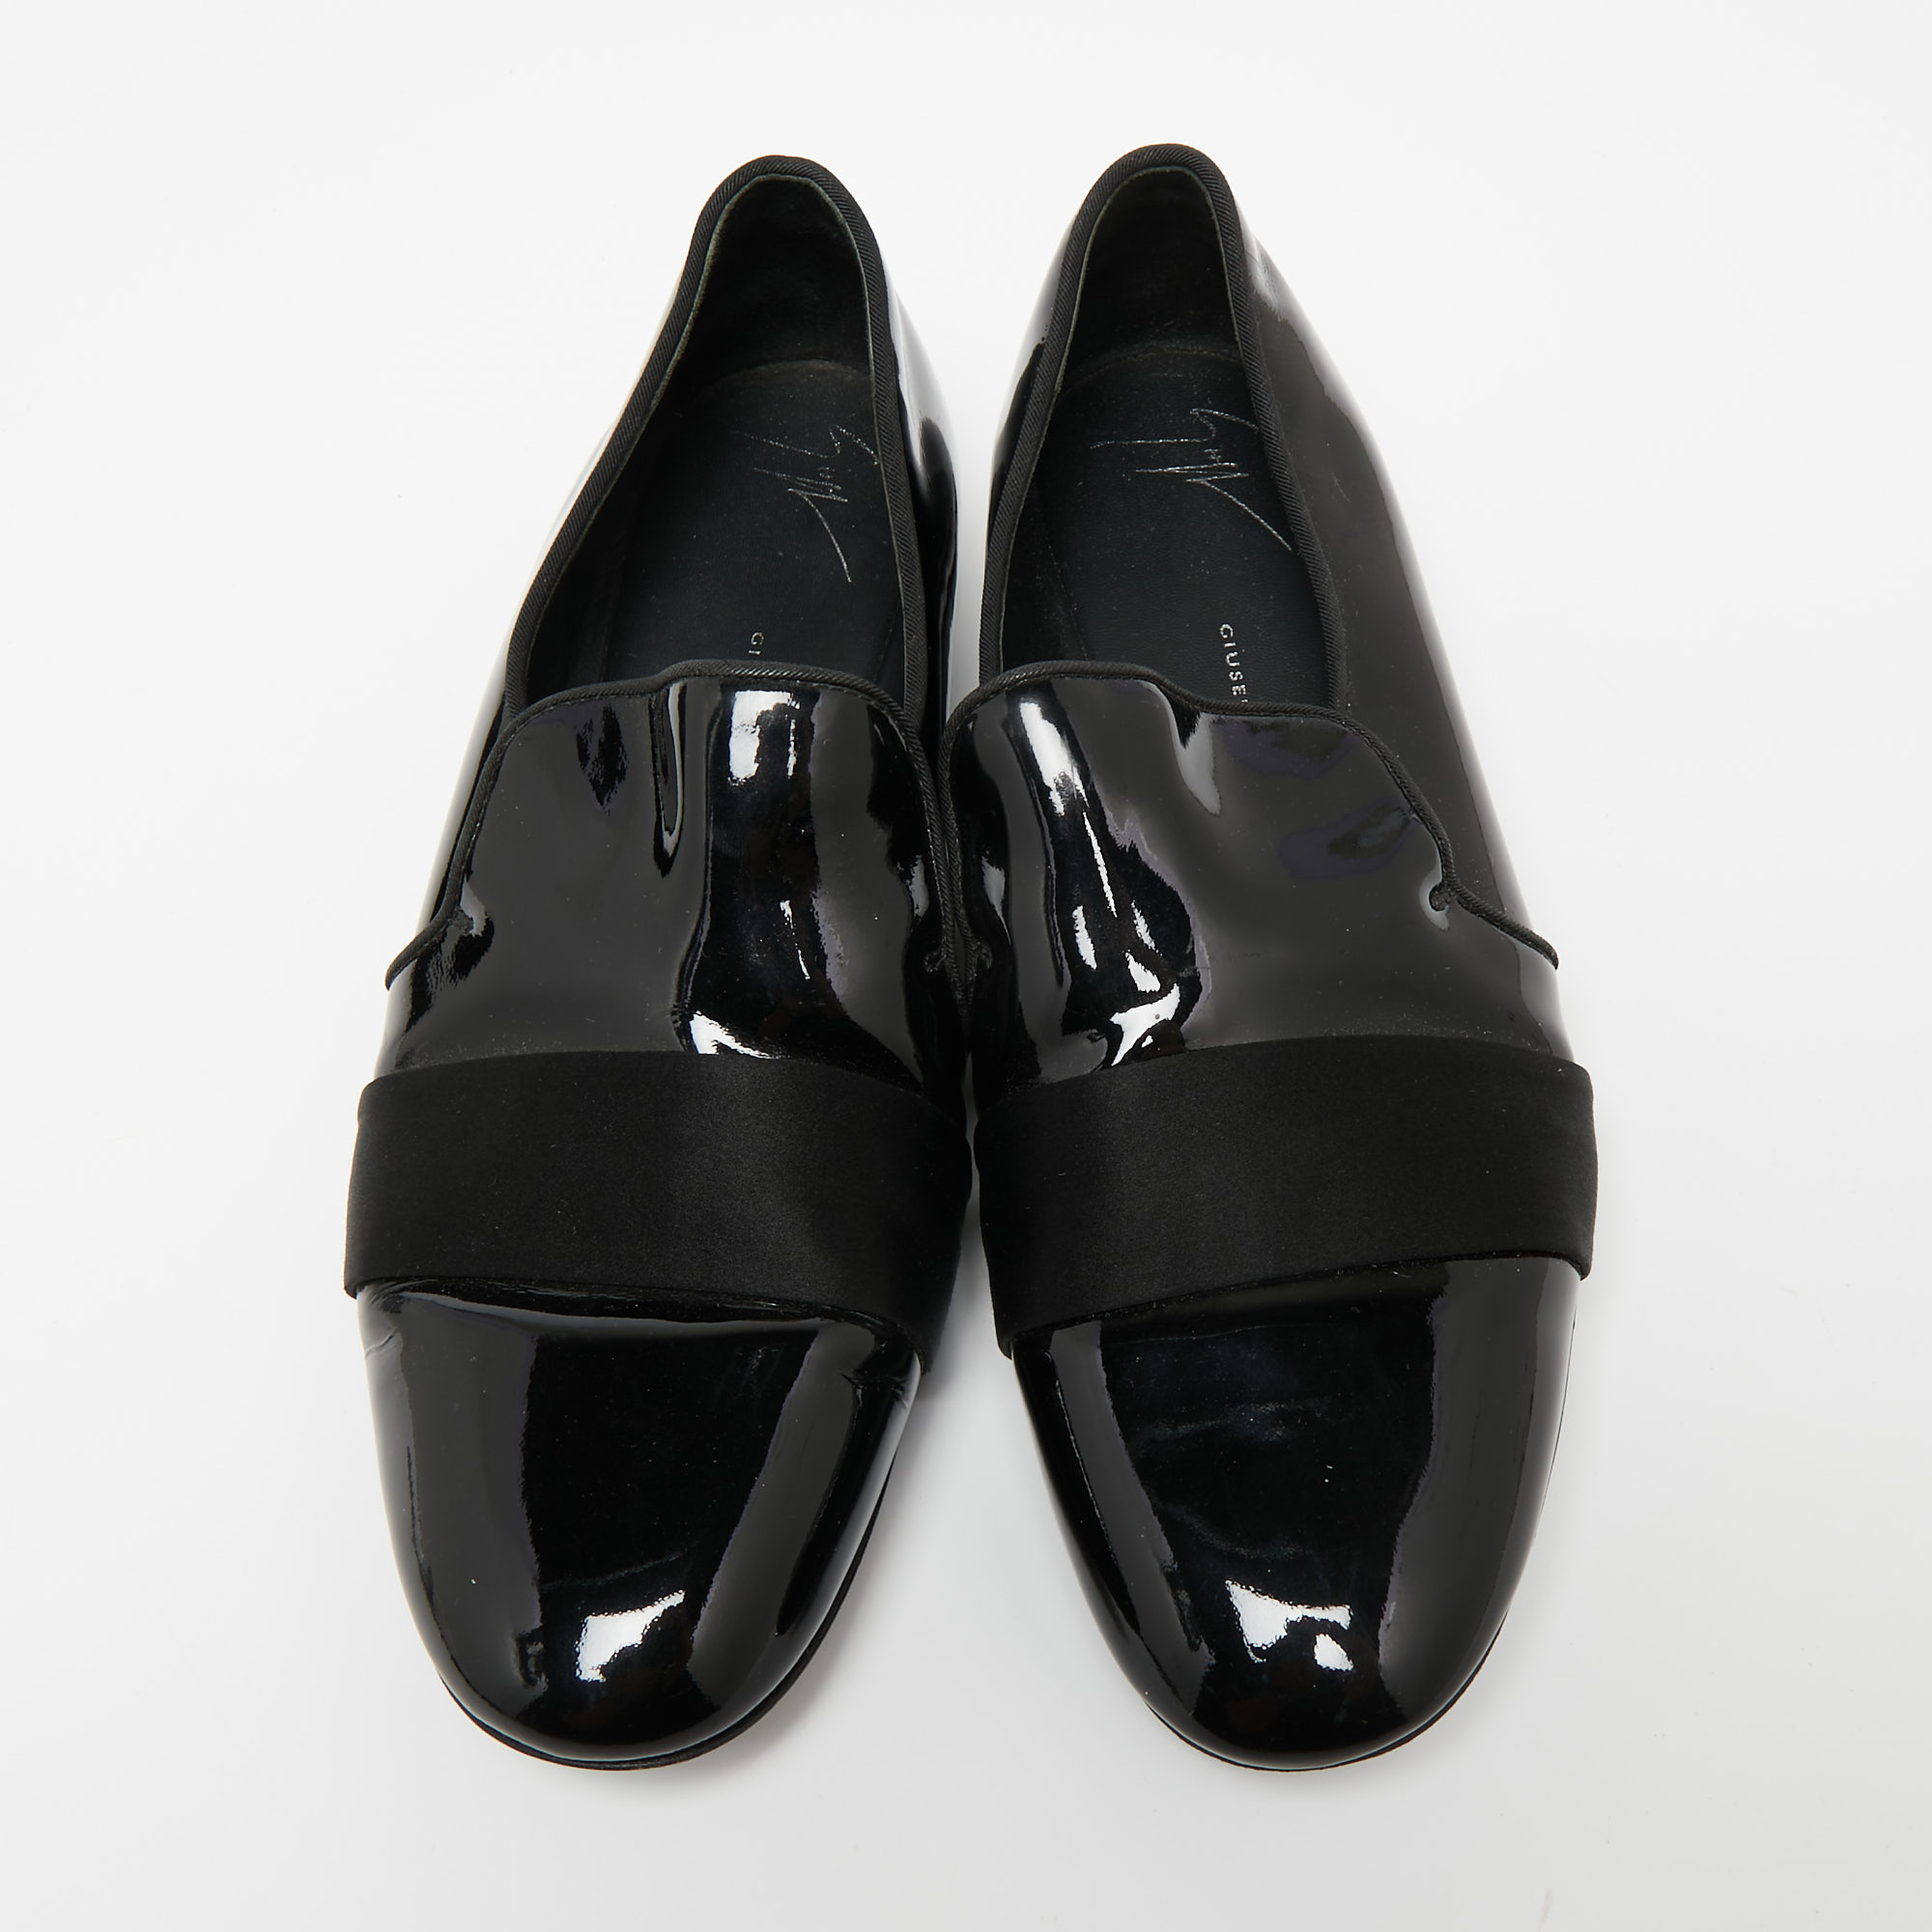 Giuseppe Zanotti Black Patent Leather And Satin Cap Toe Smoking Slippers Size 40